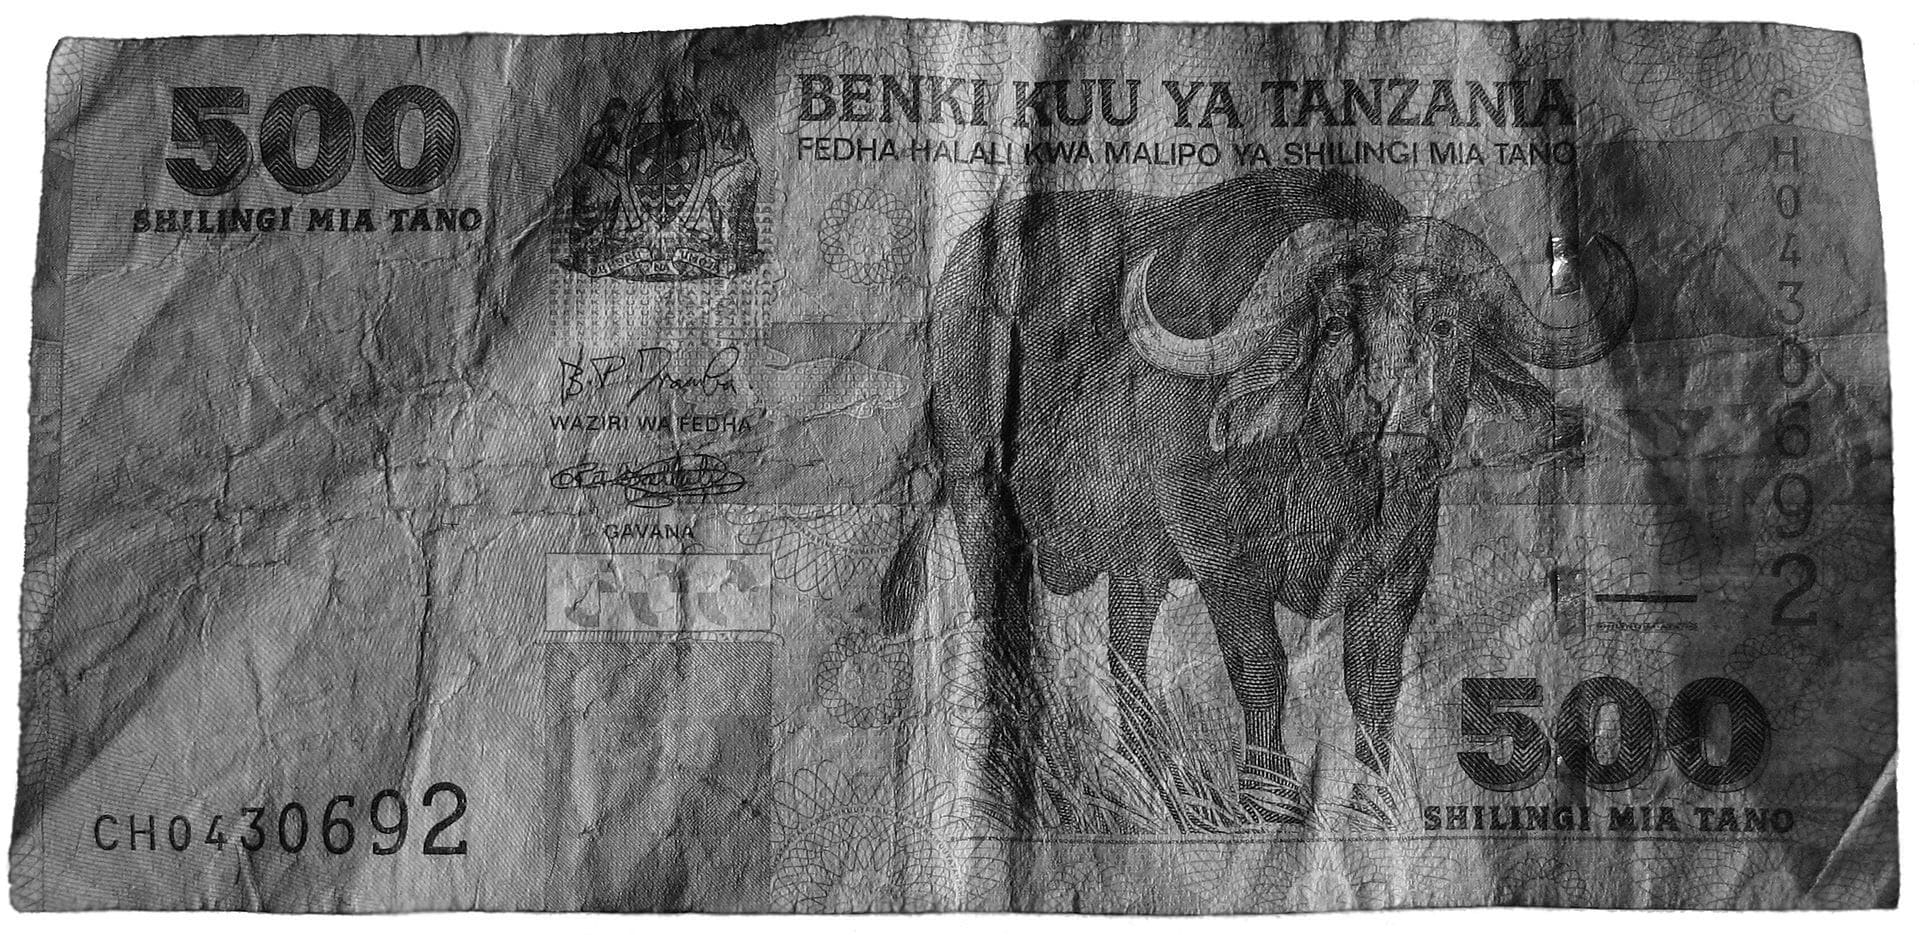 500 Tanzanian shillings note